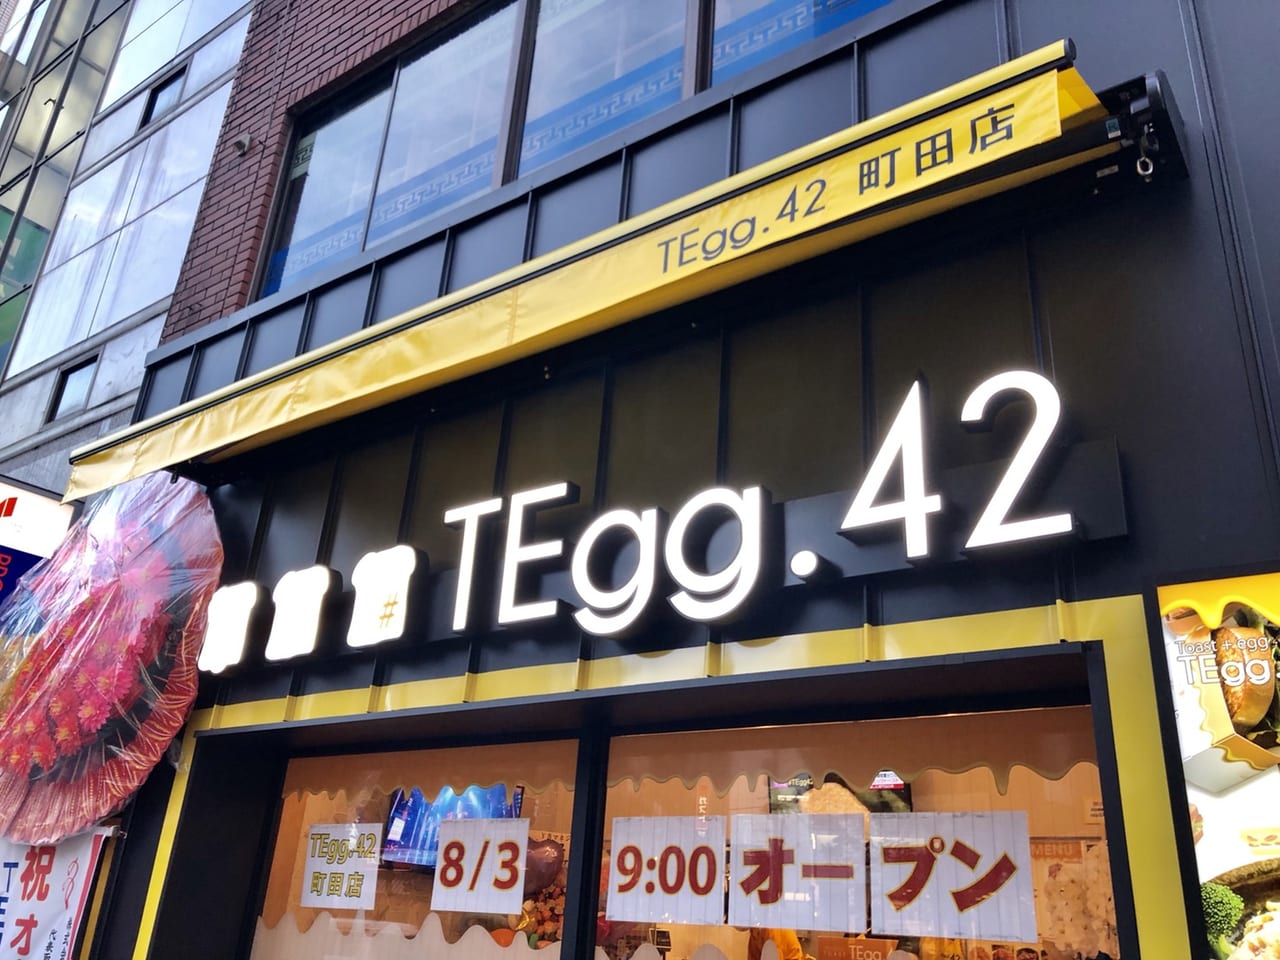 TEgg42町田